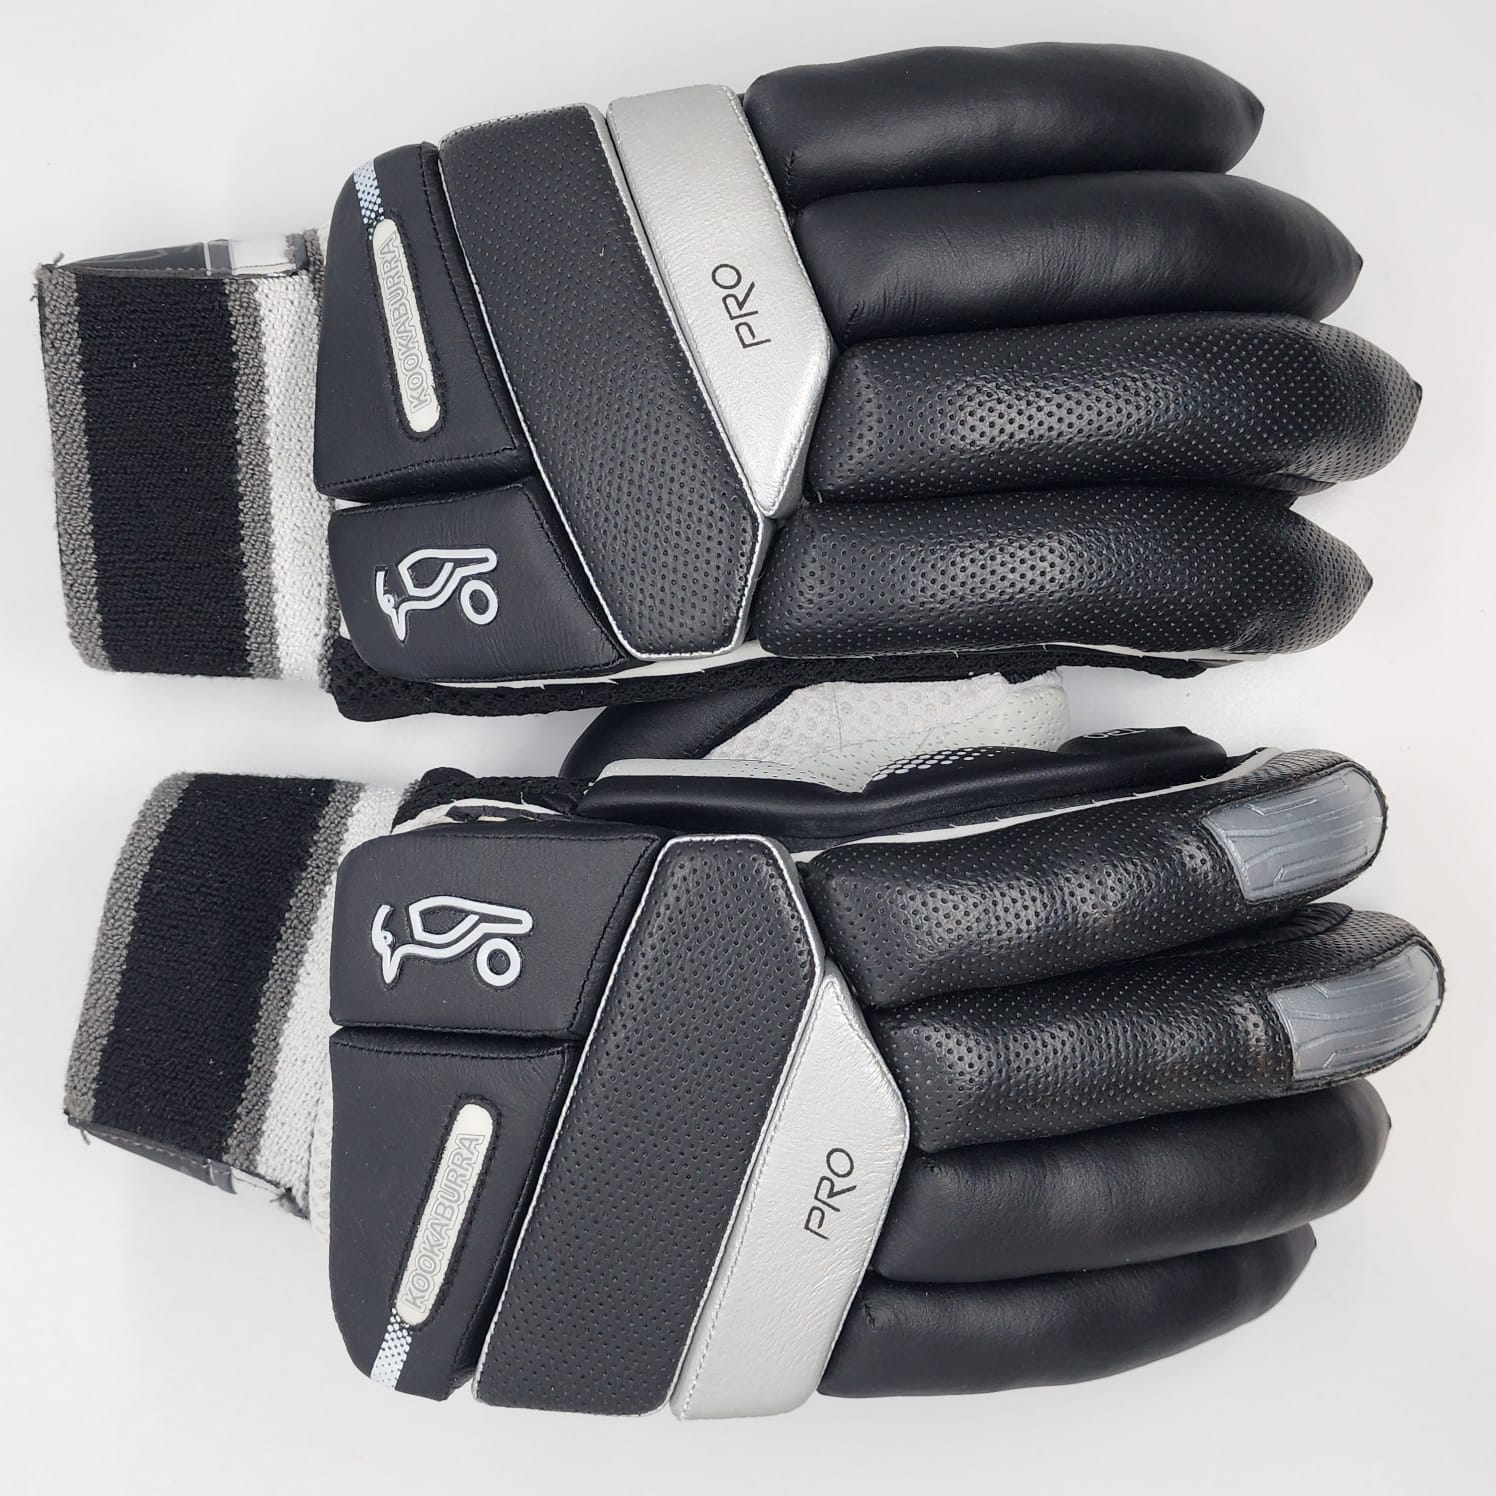 Kookaburra Pro Cricket Batting Gloves, Men Size Half White-Black - For Right Hand Players